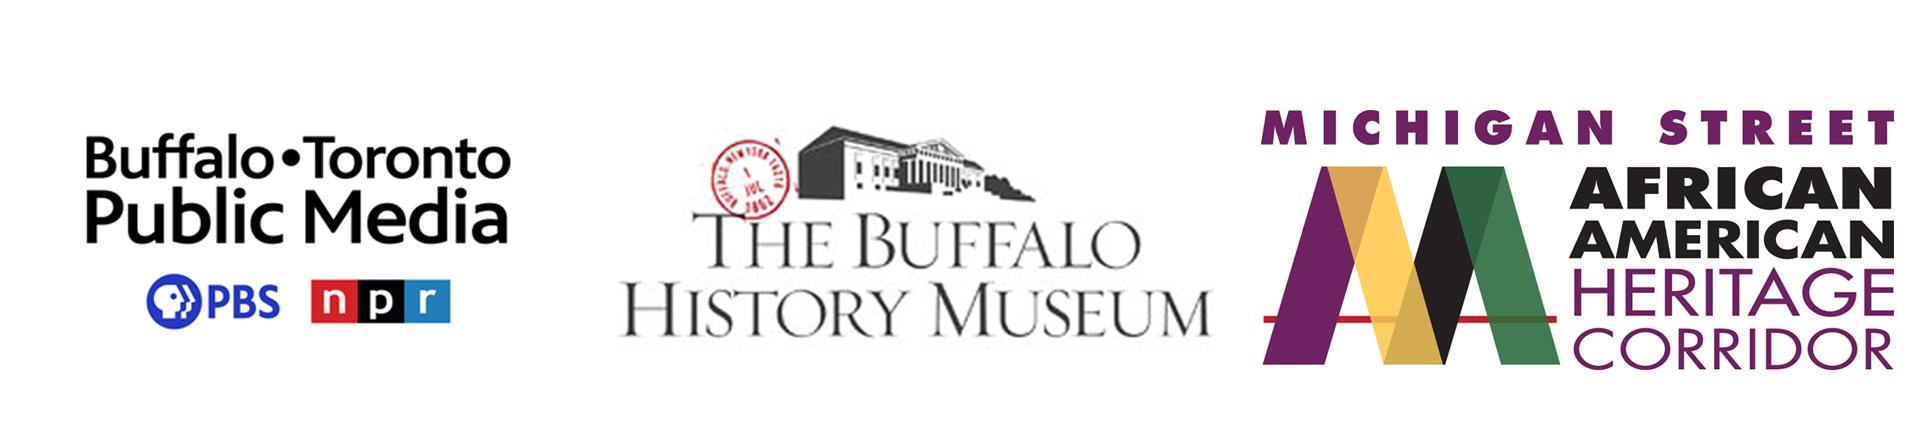 Logos: Buffalo Toronto Public Media, The Buffalo History Museum, Michigan Street African American Heritage Corridor